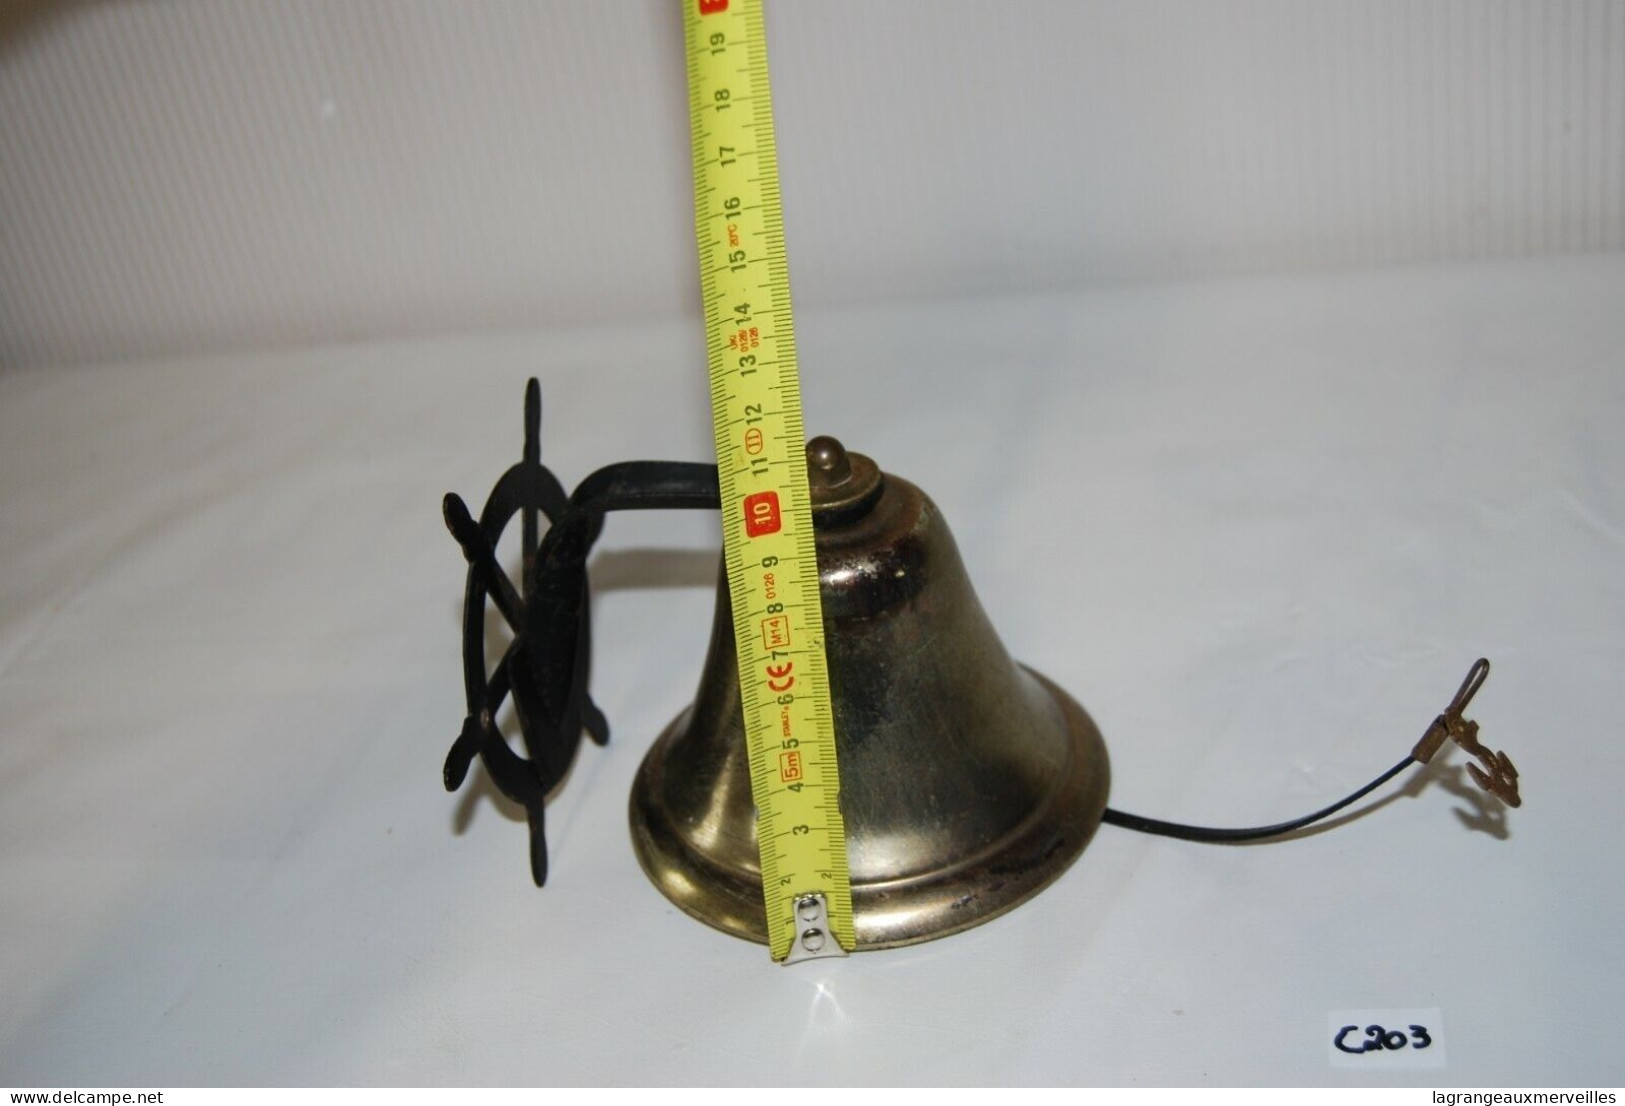 C203 Ancienne Cloche A Suspendre - Bateau - Bells